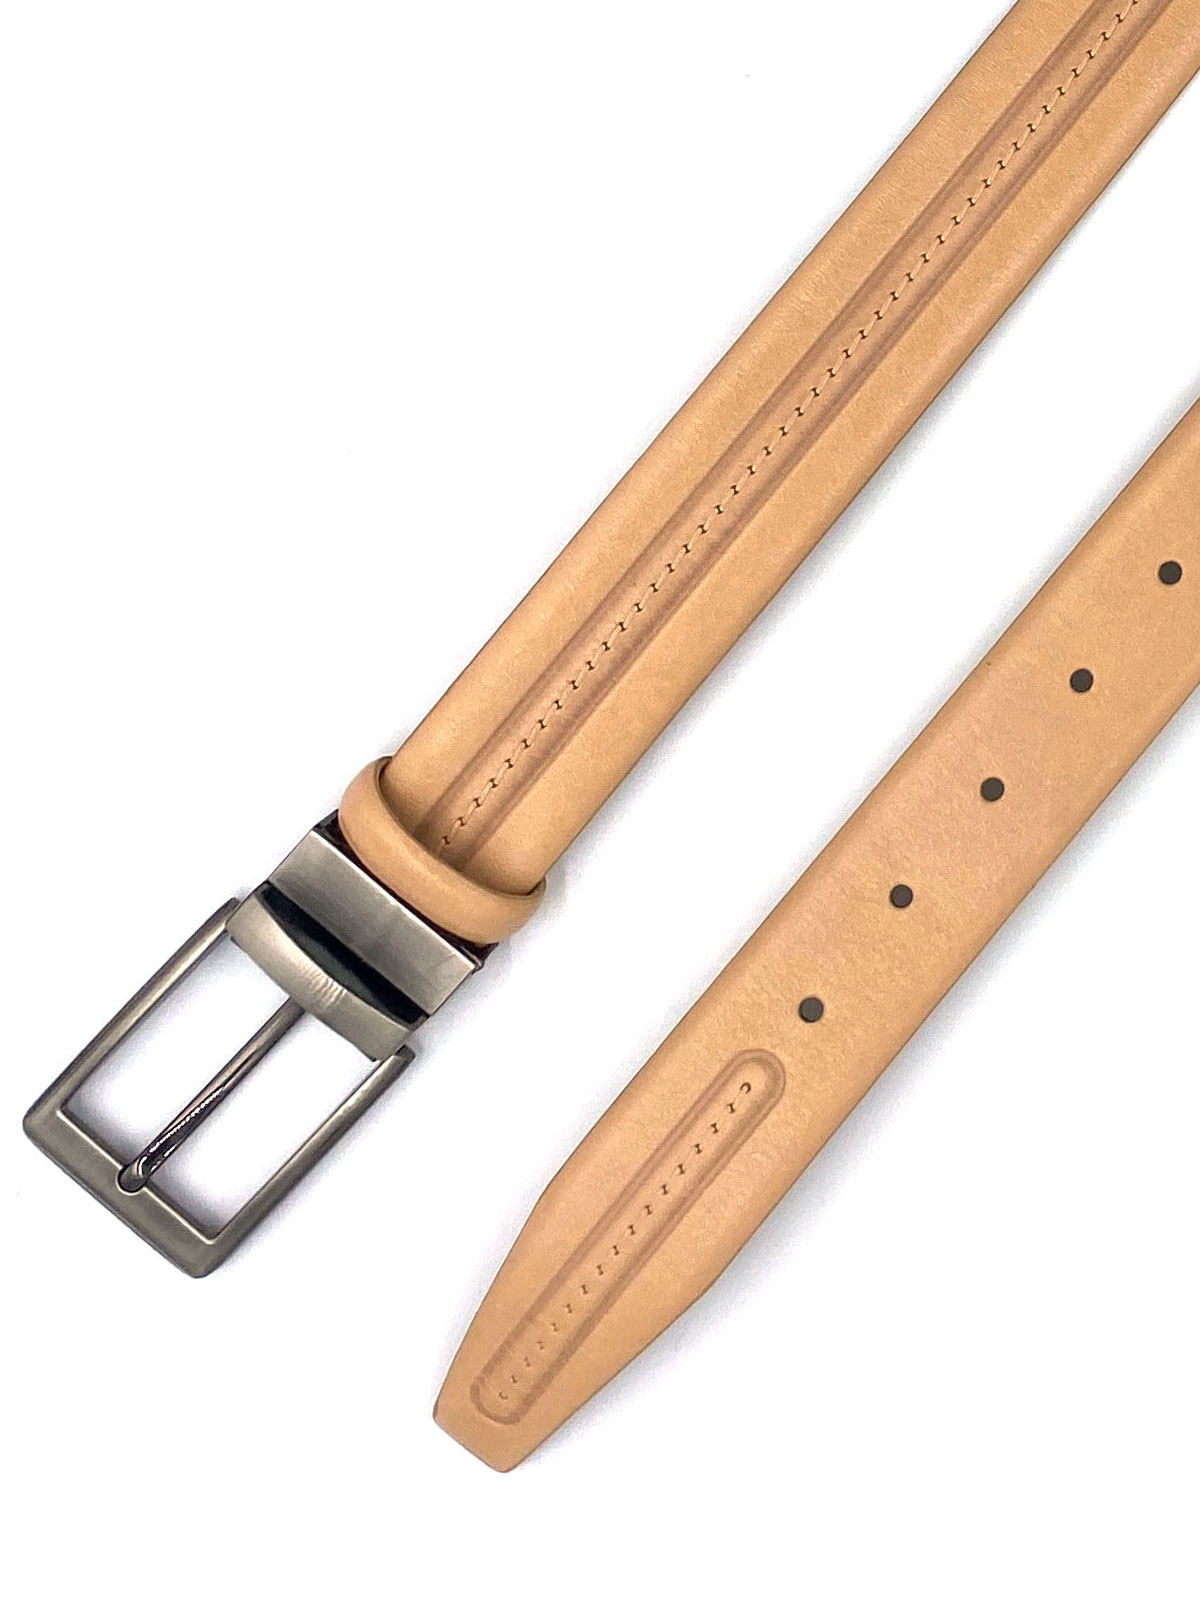  belt in light beige with decorative sti - 10408 - € 21.37 img3